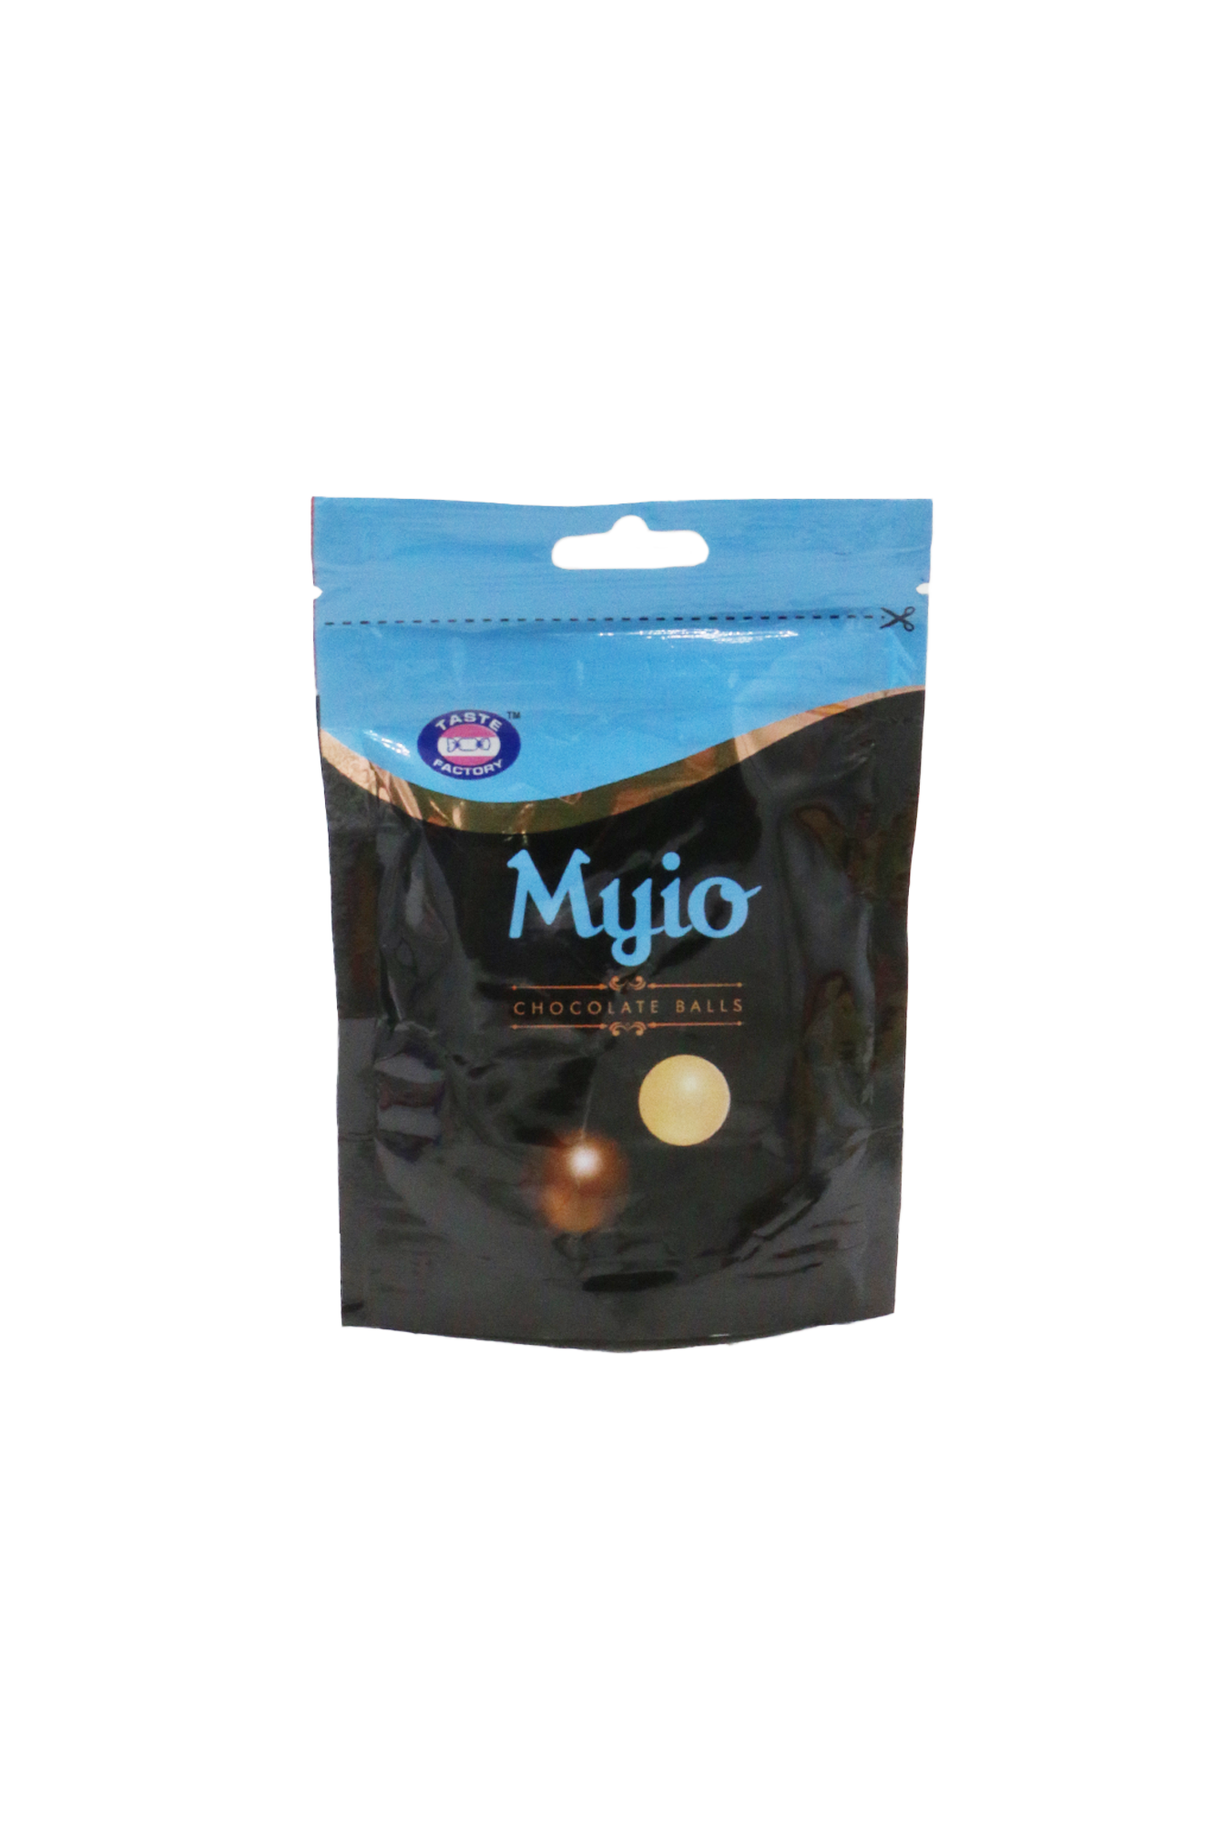 taste factory myio chocolate balls 55g